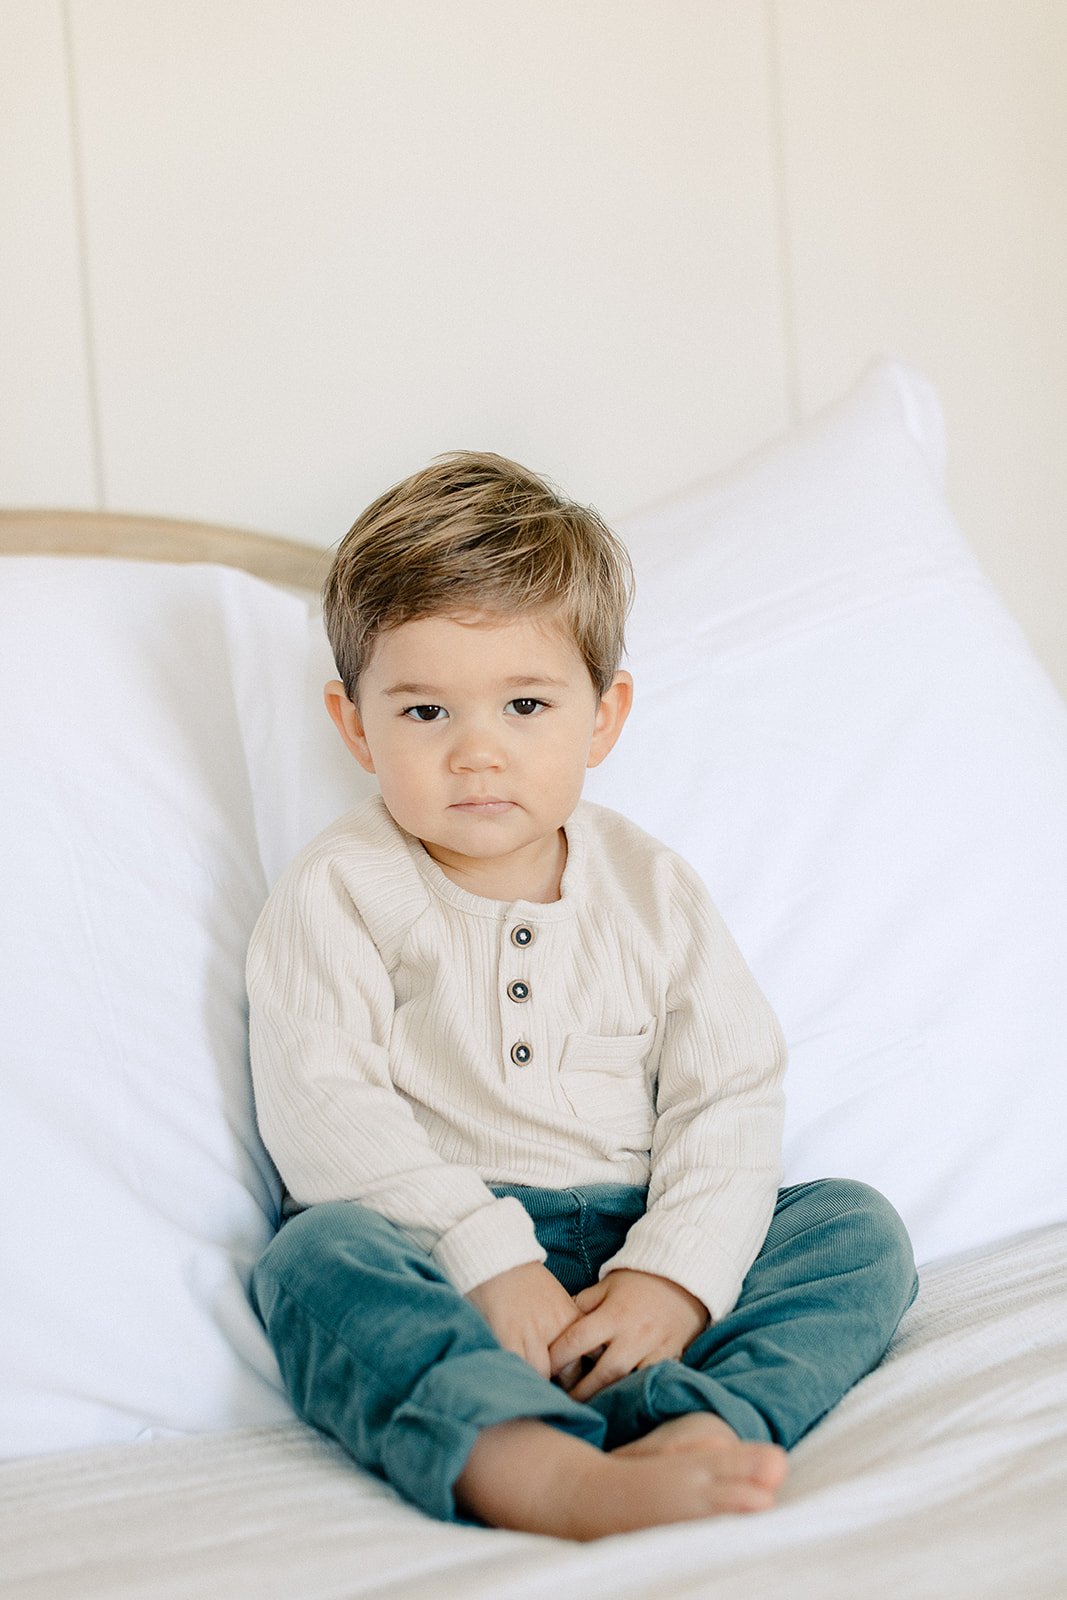  tunbridge wells family photographer toddler on bed 